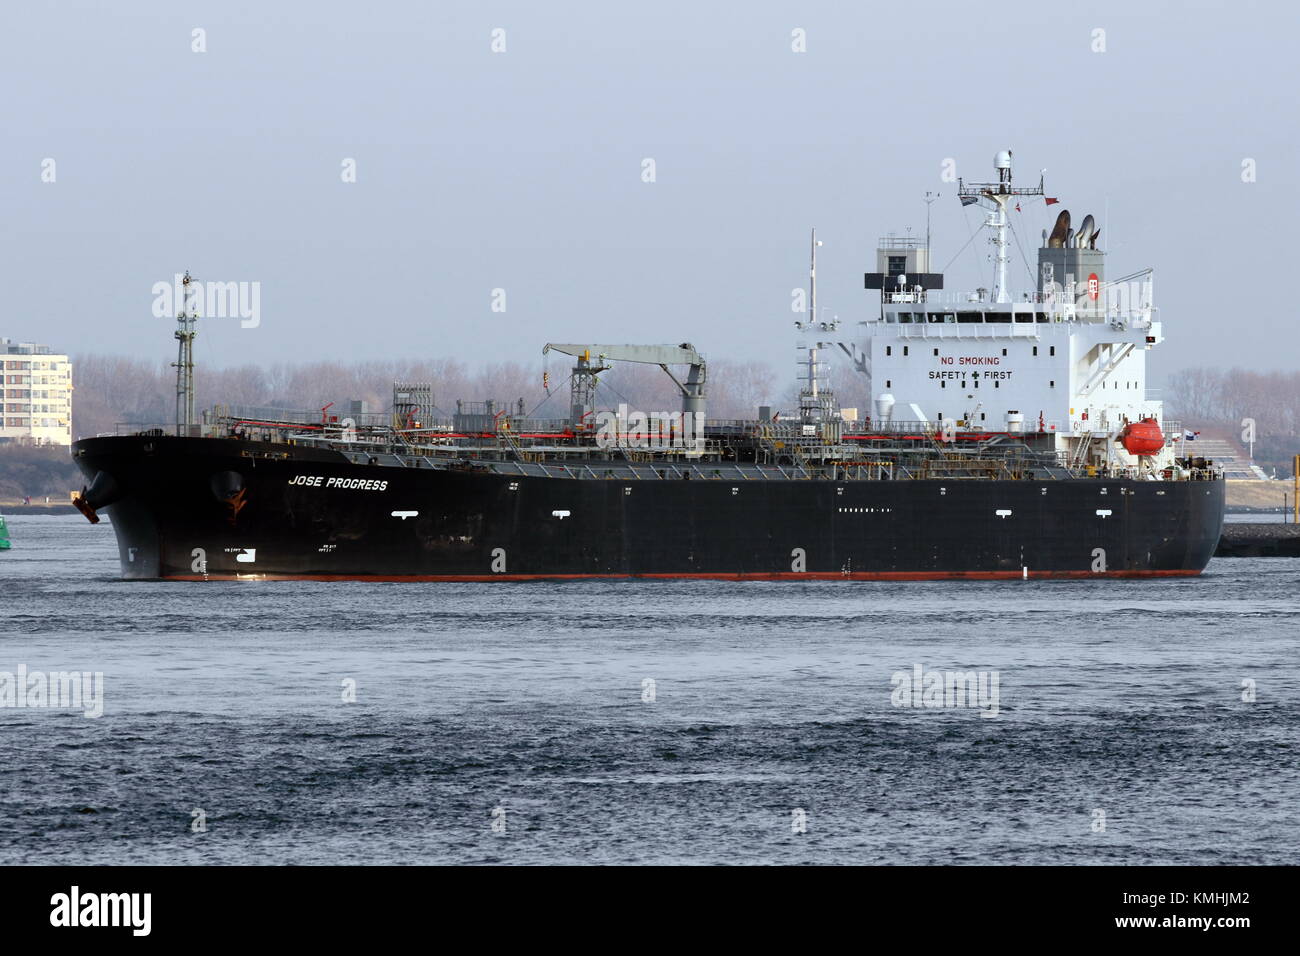 The tanker Jose Progress leaves the port of Rotterdam. Stock Photo